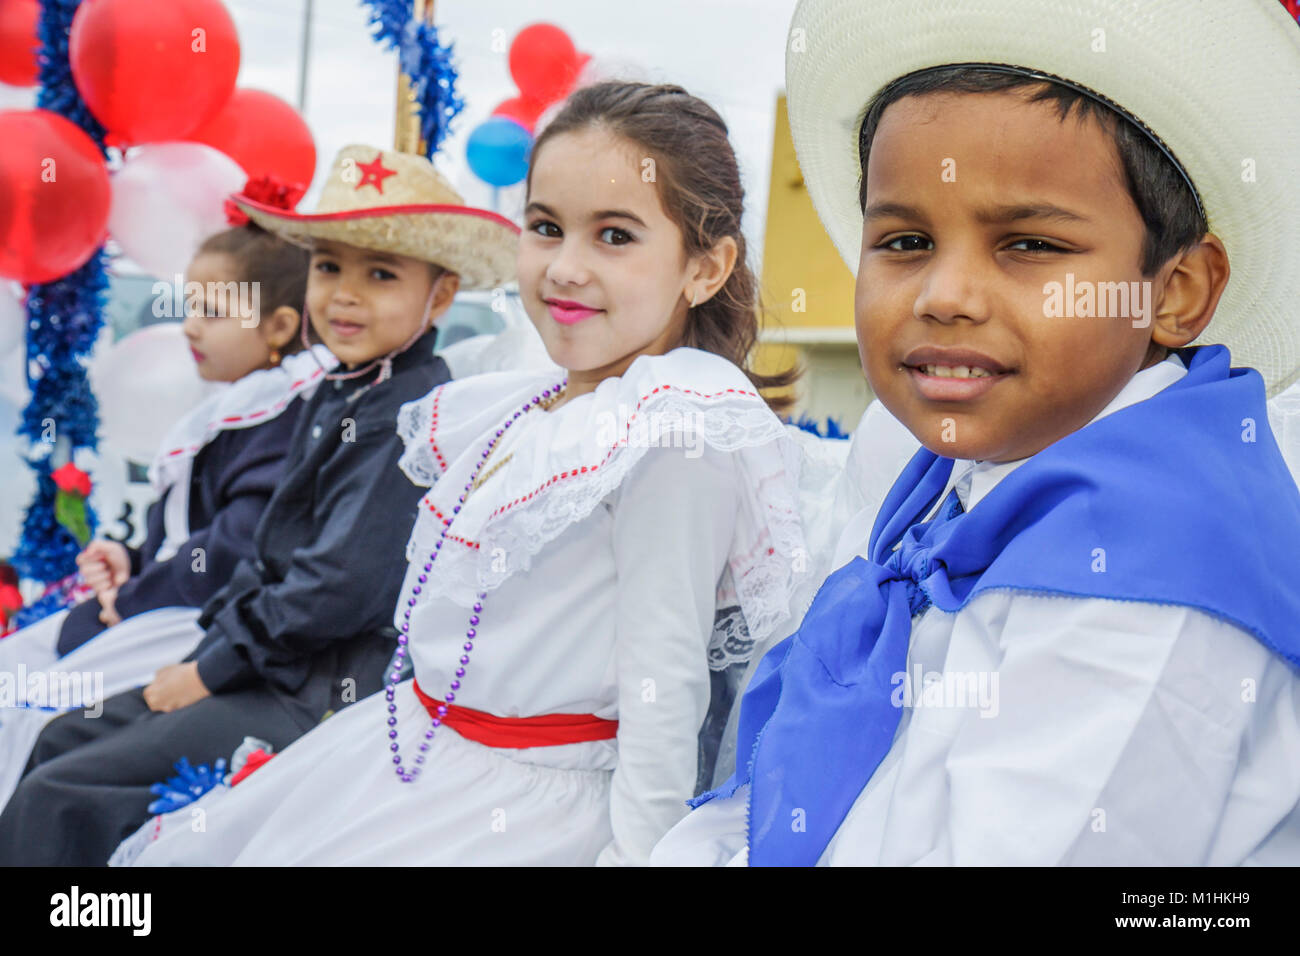 Florida,Hialeah,Jose Marti Parade,honoring Cuban poet,participant,Hispanic boy boys male girl,girls female kids children costume,straw hat,FL080120041 Stock Photo